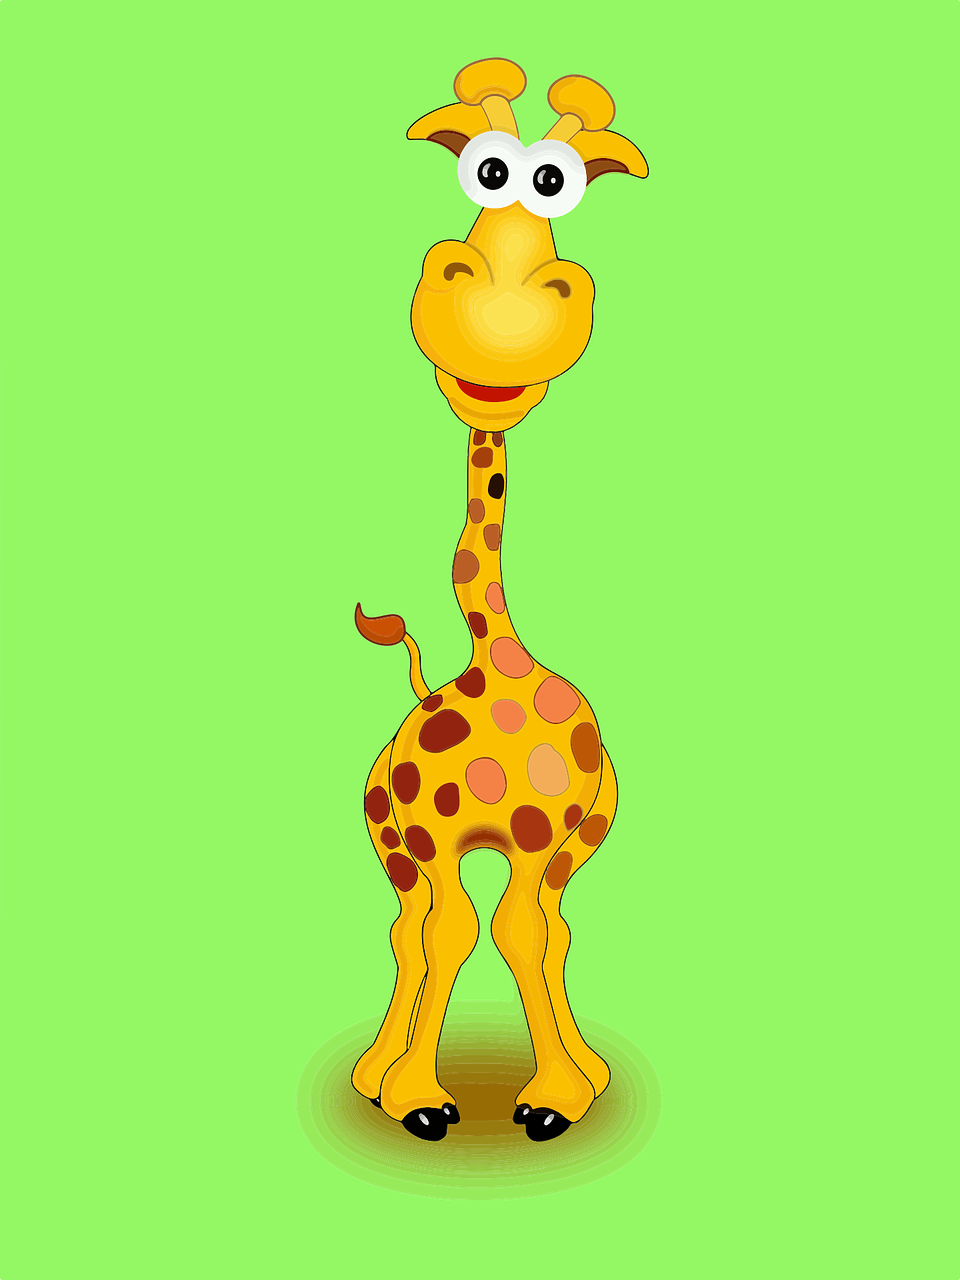 Africa,animal,cartoon,giraffe,wildlife - free image from needpix.com